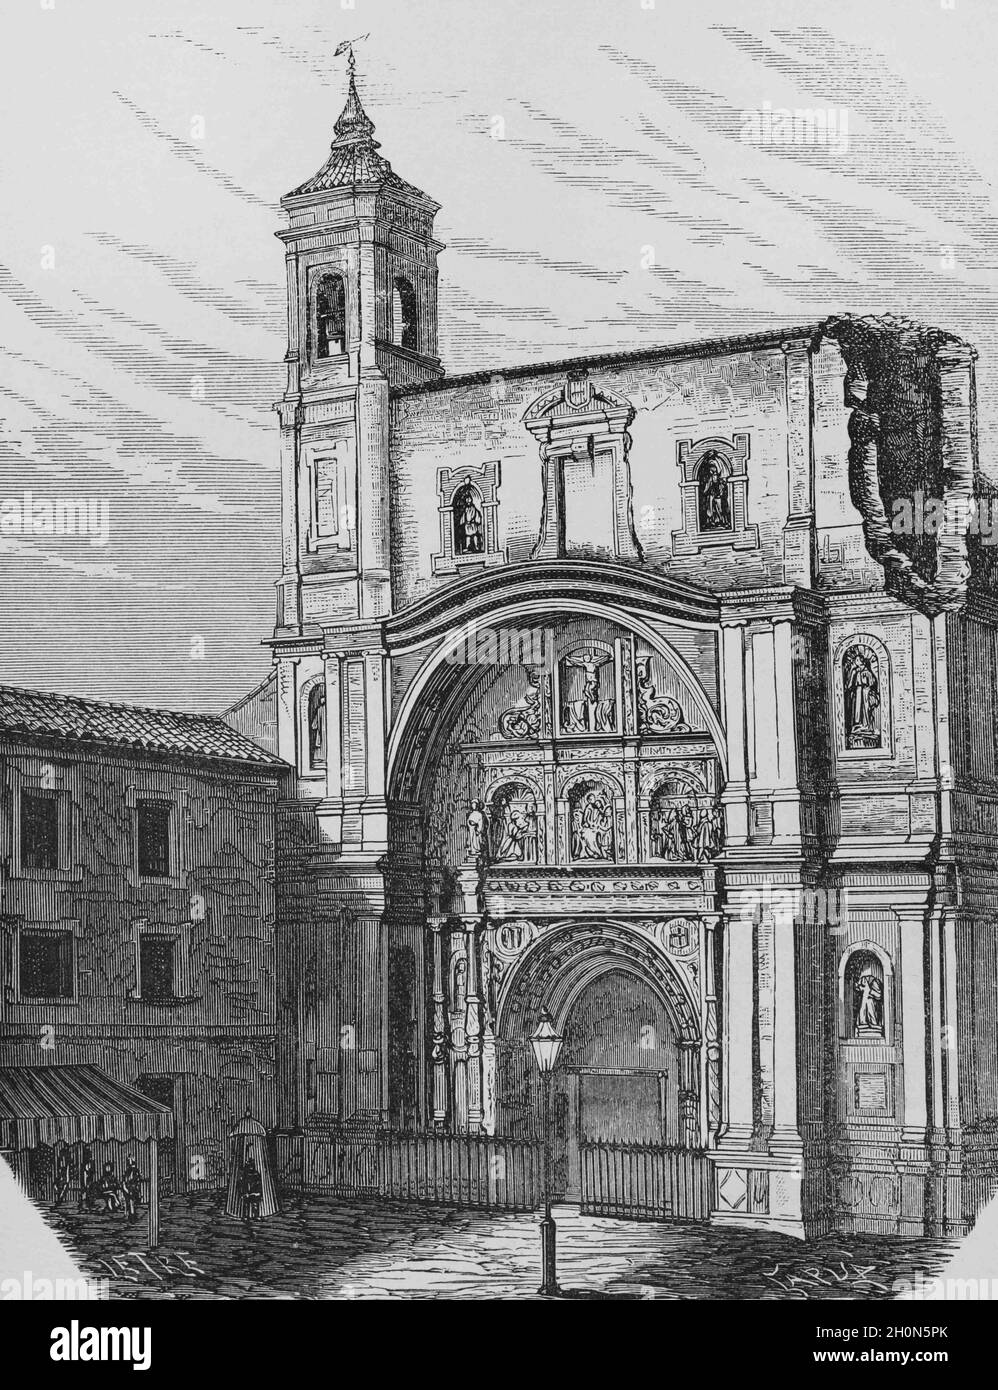 Spain, Aragon, Zaragoza. Basilica of Santa Engracia. General view of the Renaissance-style facade. Illustration by Letre. Engraving by Capuz. Cronica Stock Photo